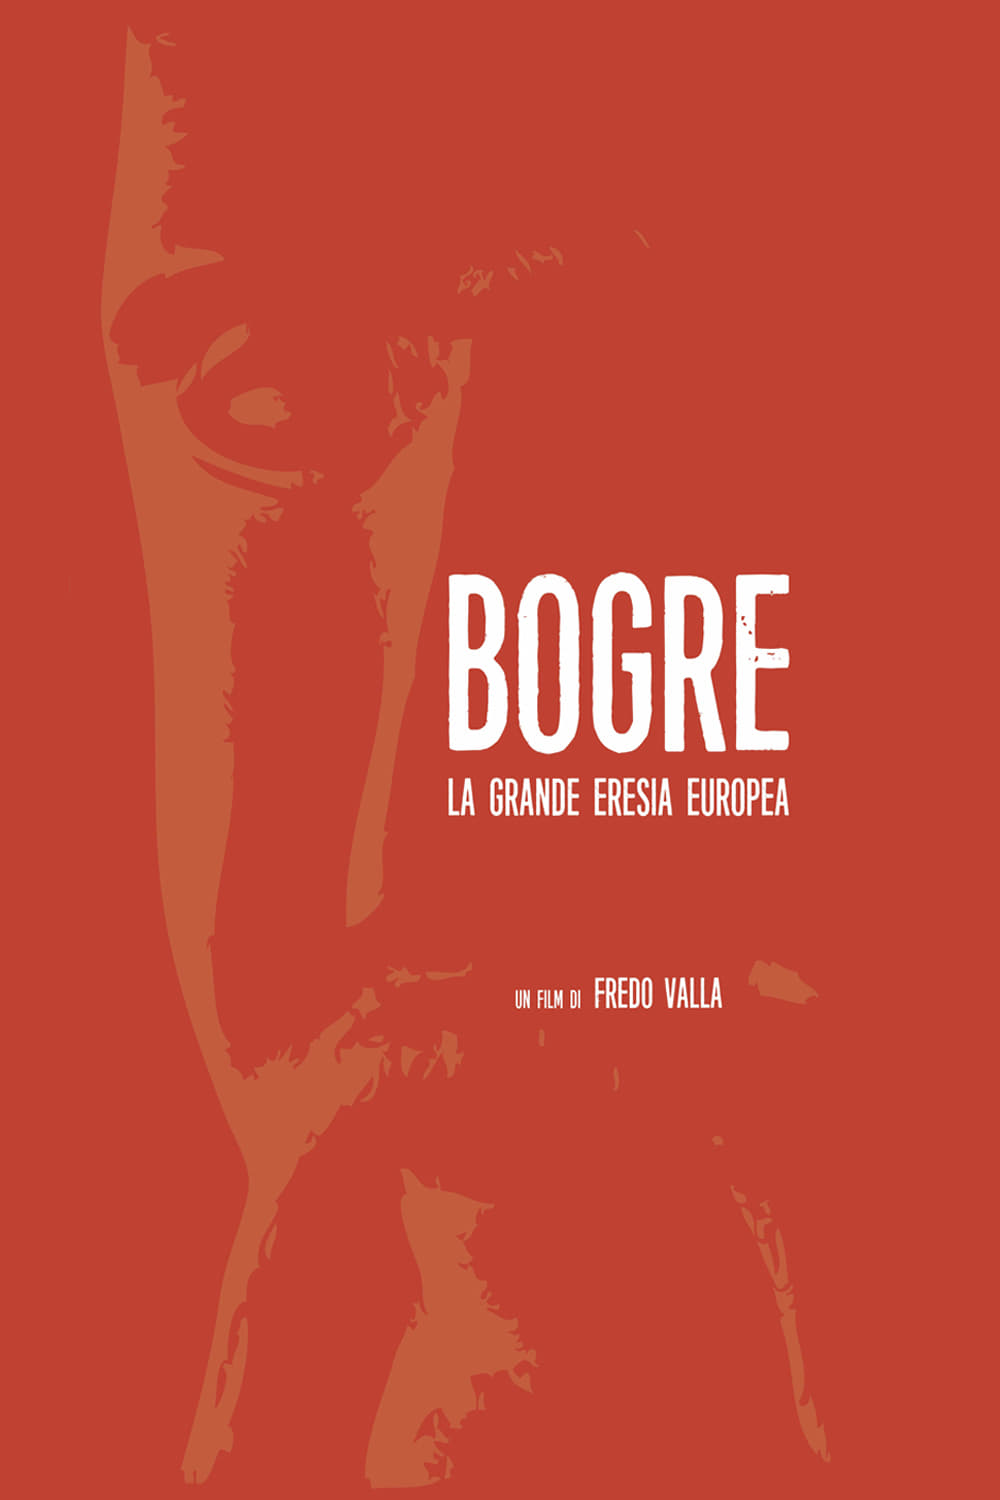 Bogre. The Great European Heresy